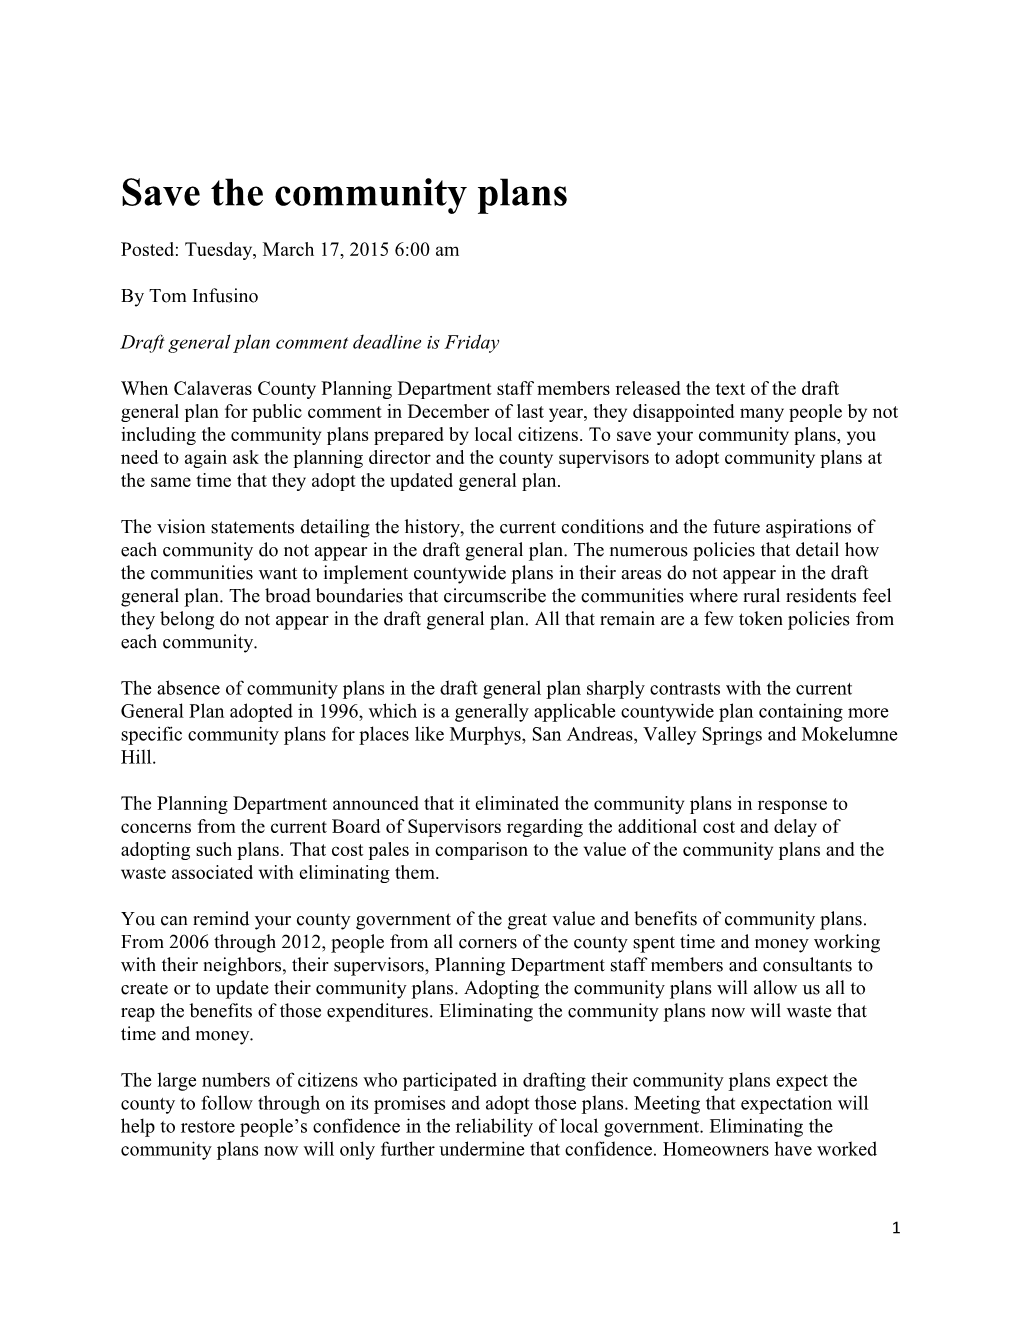 Save the Community Plans